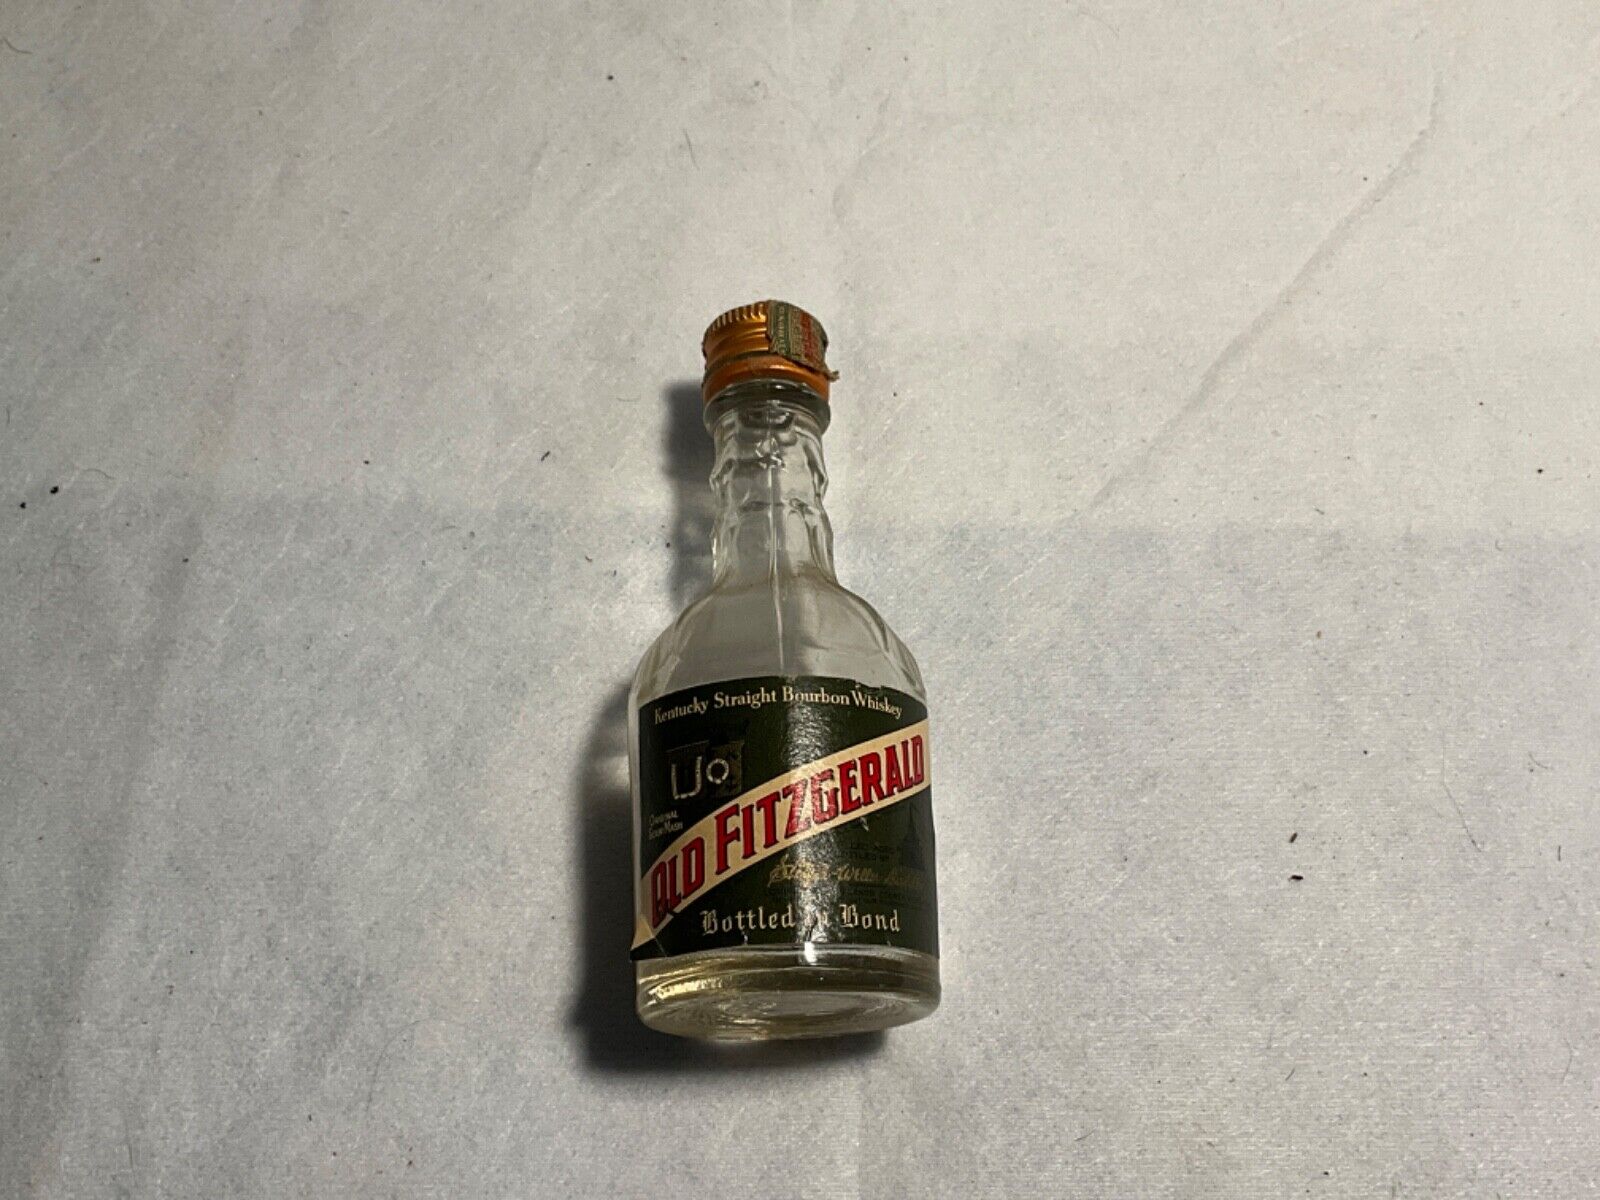 Vtg 1950s Era Old Fitzgerald Bourbon Whiskey 1/10 Pint 100-Proof BIB Mini Bottle